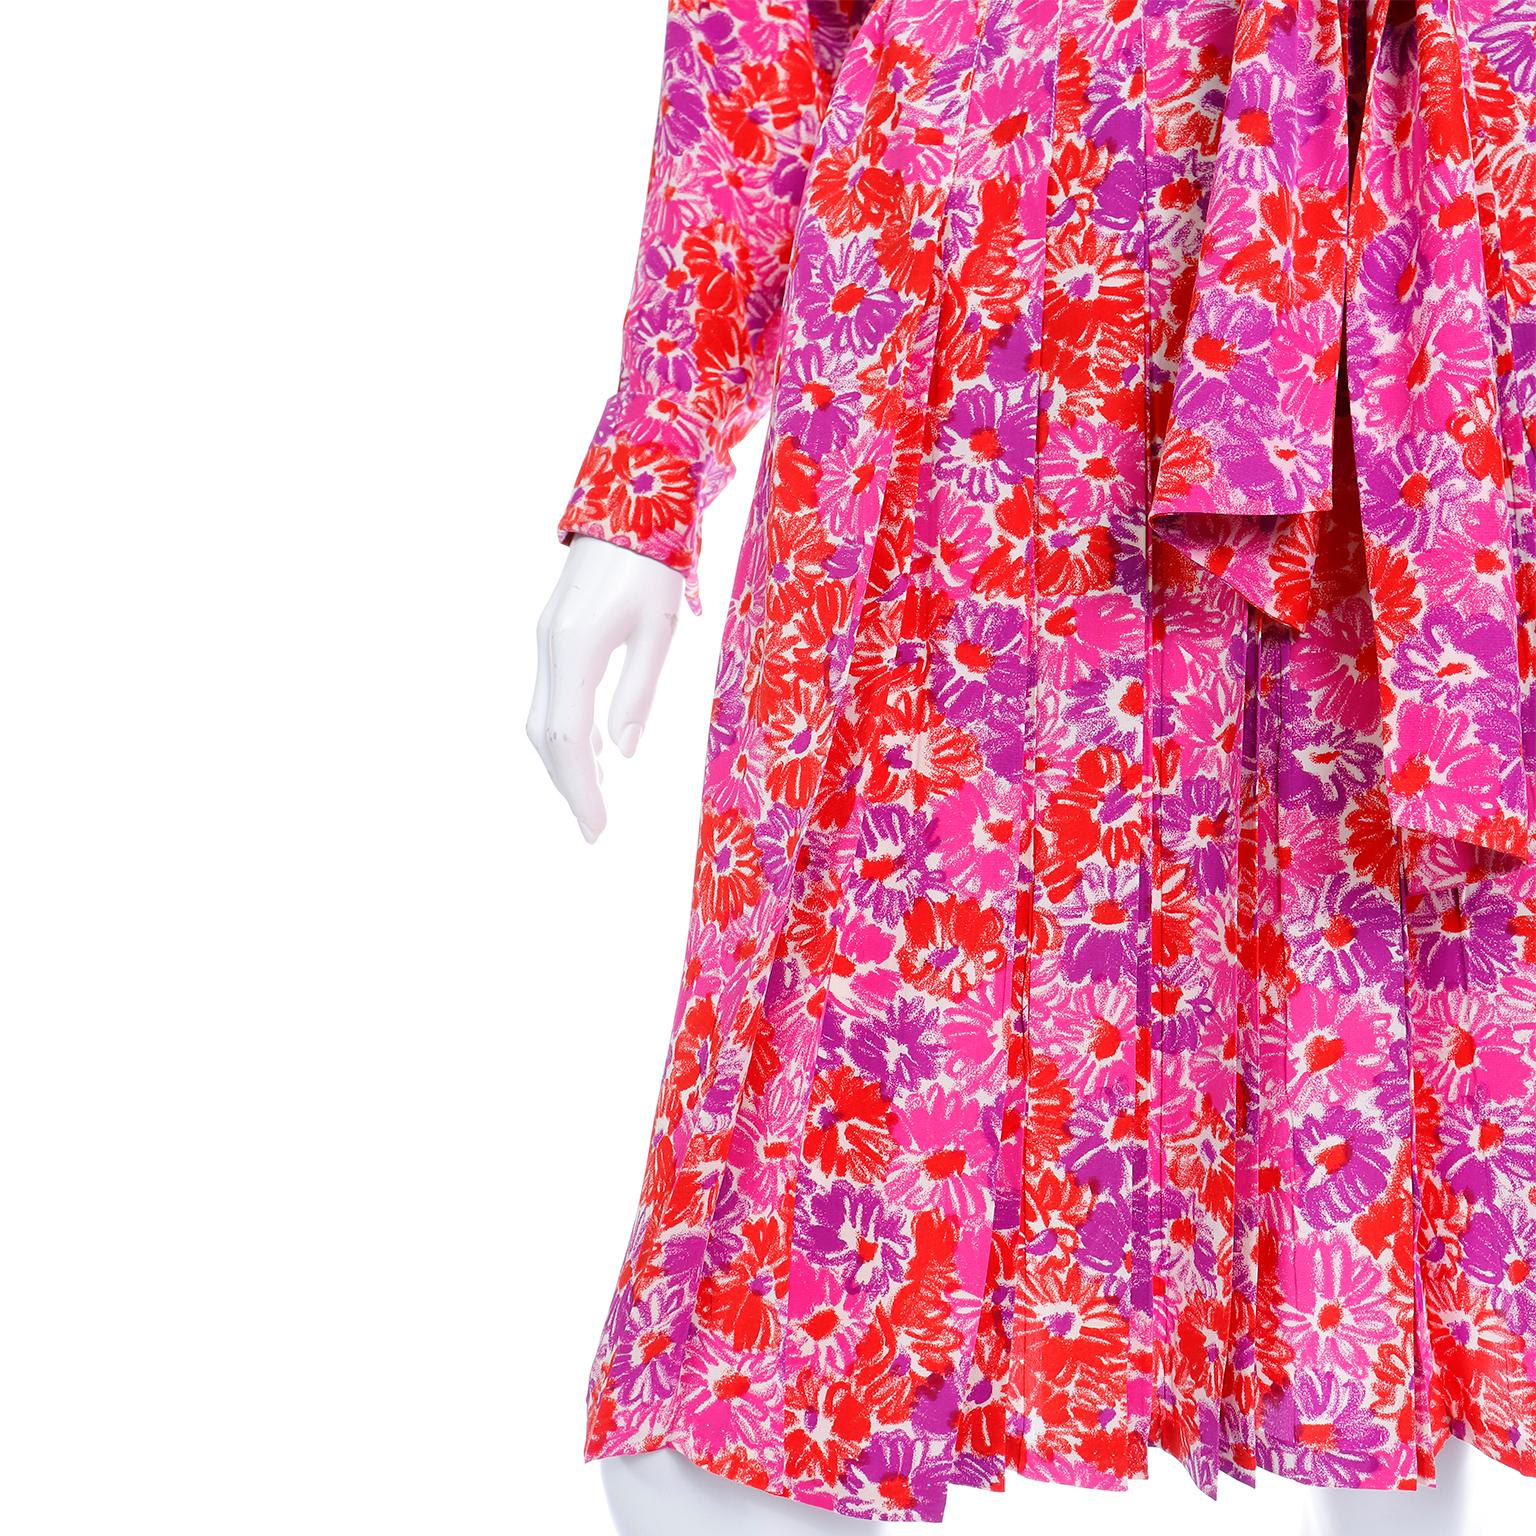 Yves Saint Laurent S/S 1989 Vintage Colorful Pink Floral Silk YSL Runway Dress For Sale 3